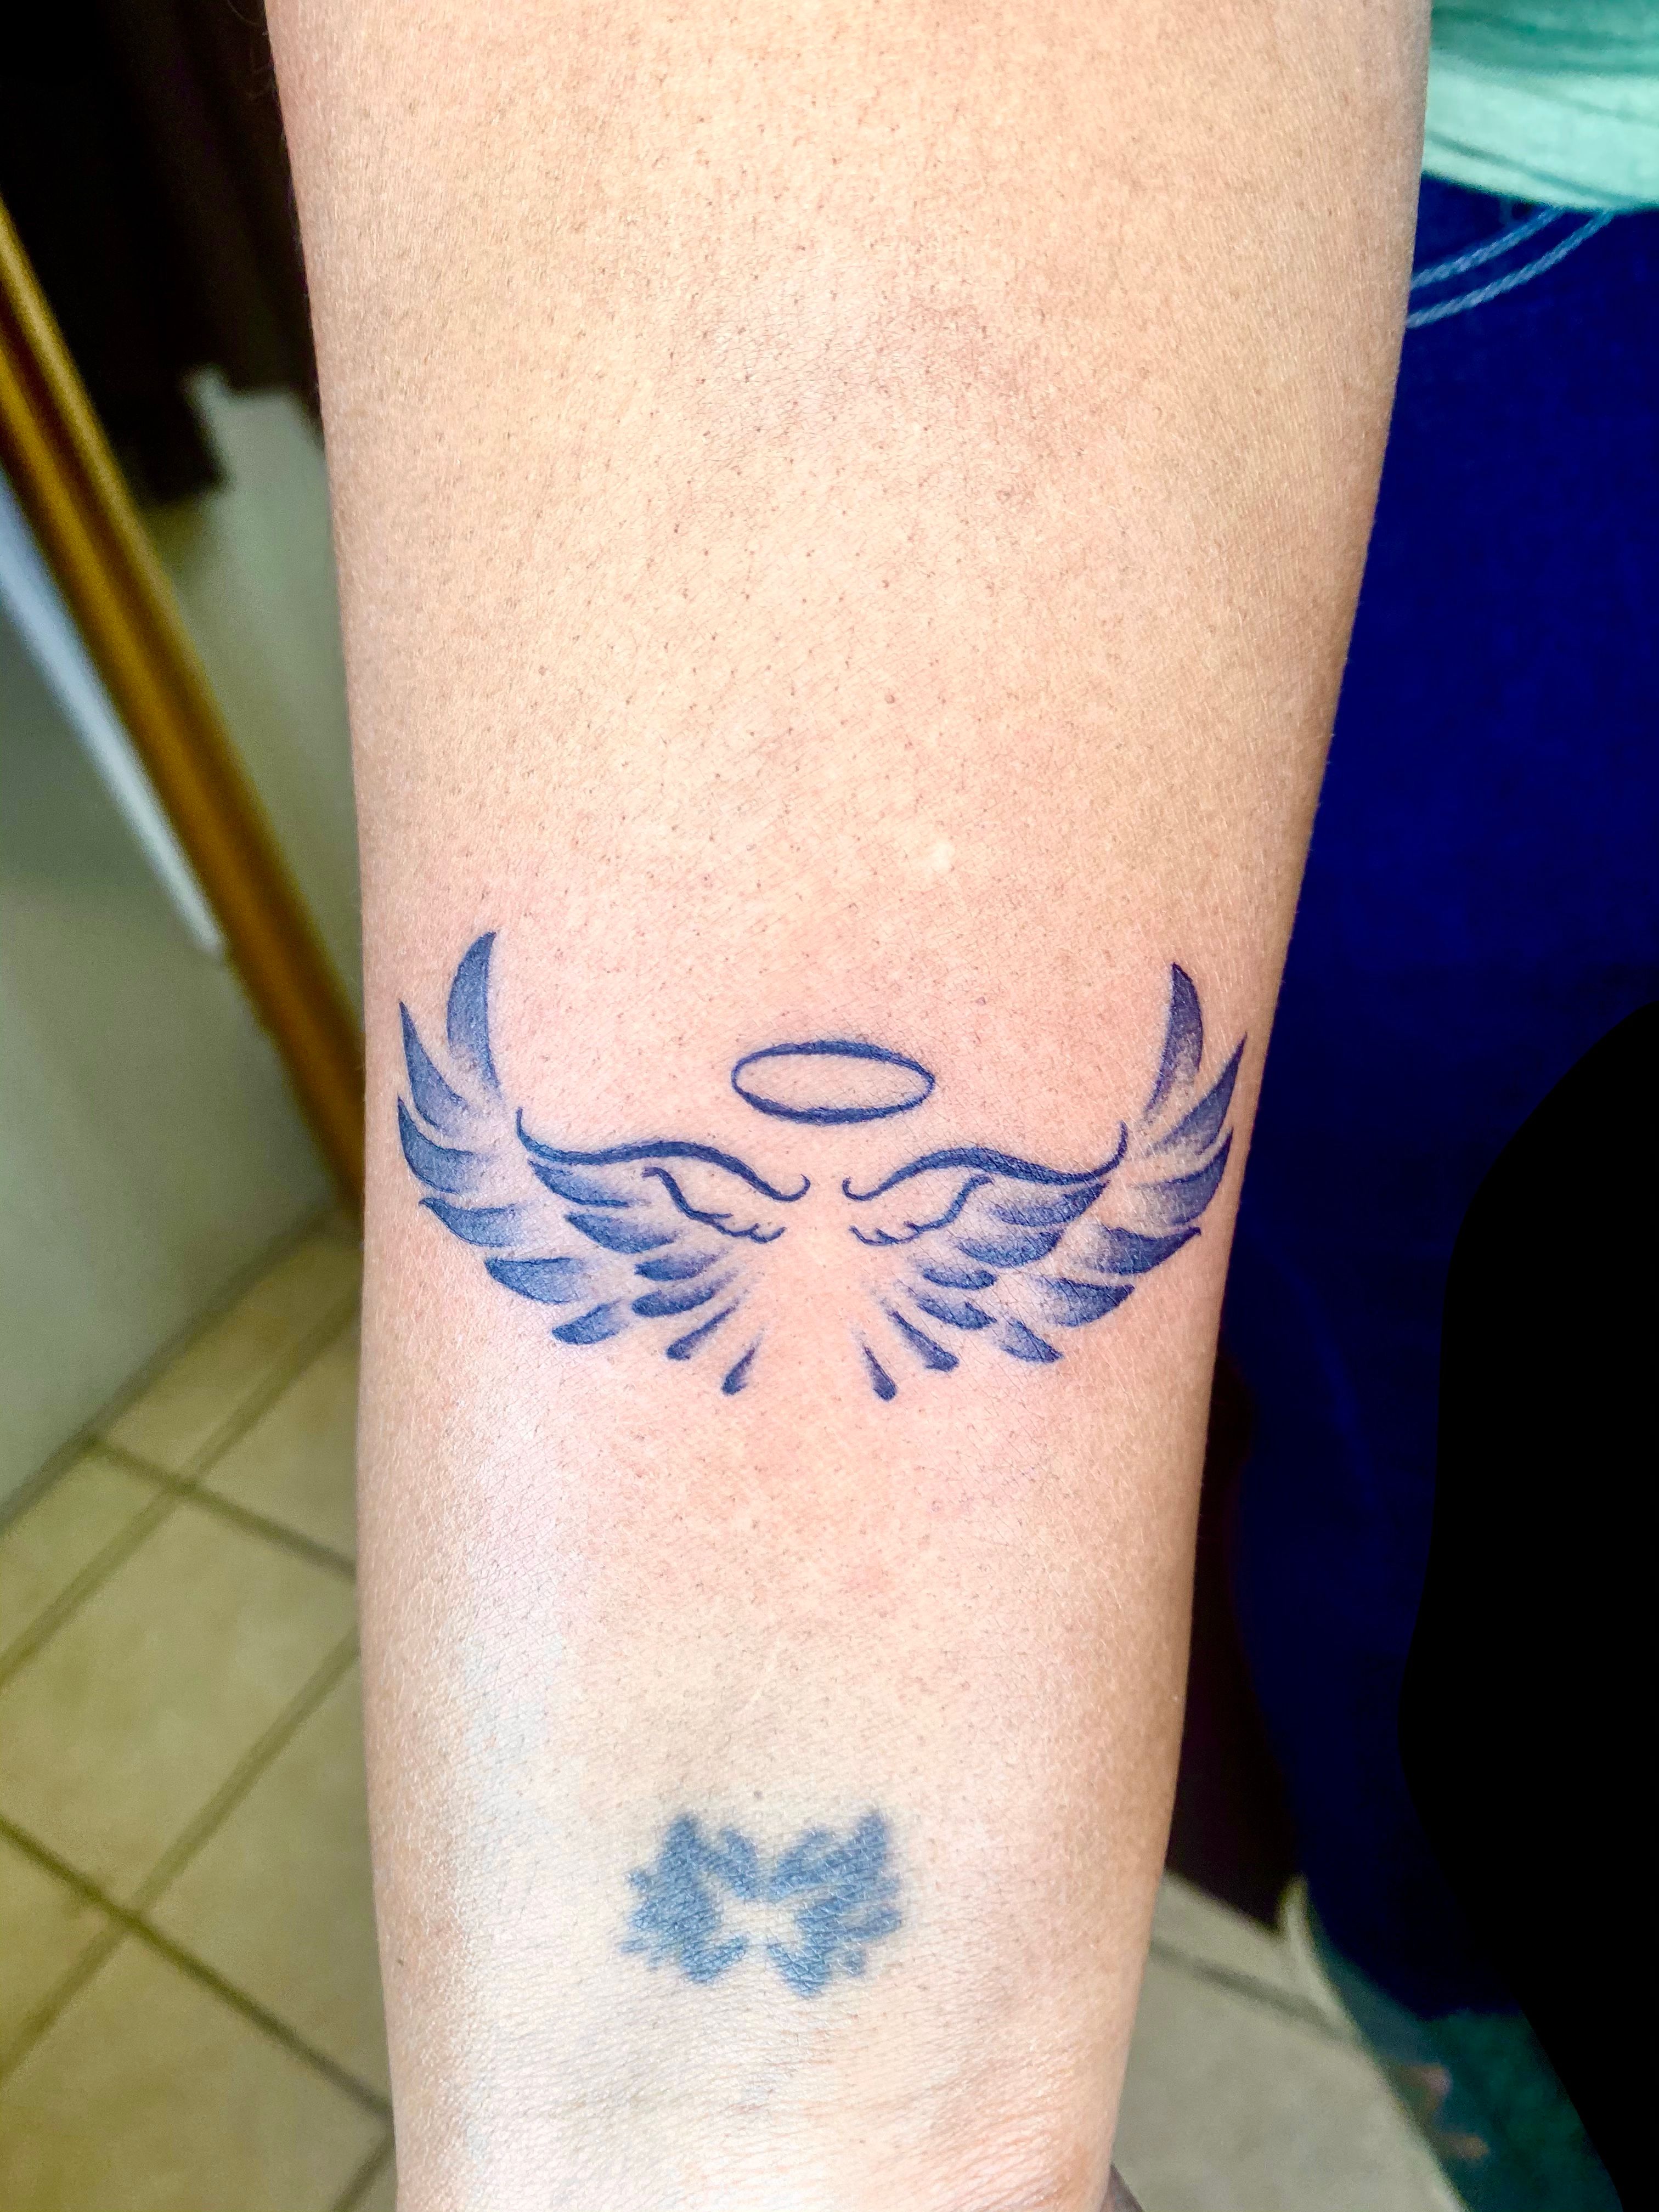 Angel tattoo design by DisWin on DeviantArt